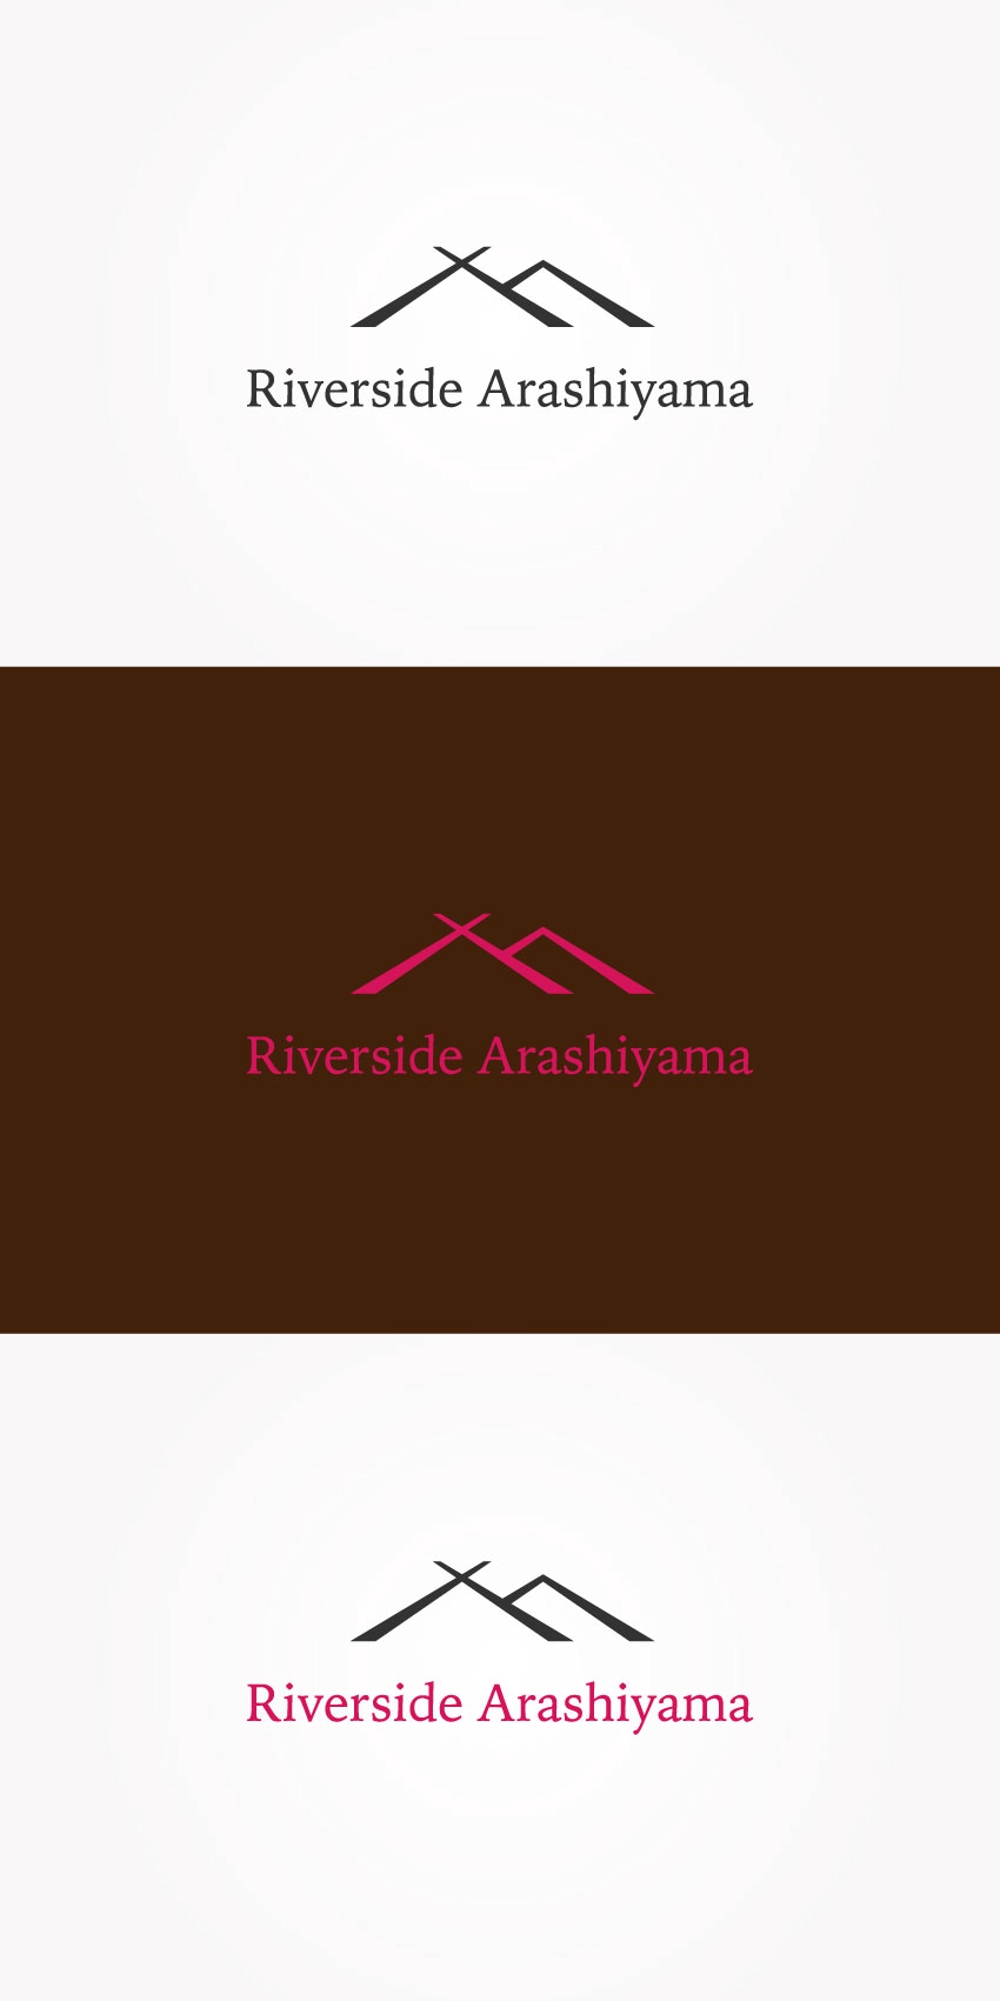 Riverside-Arashiyama-02.jpg